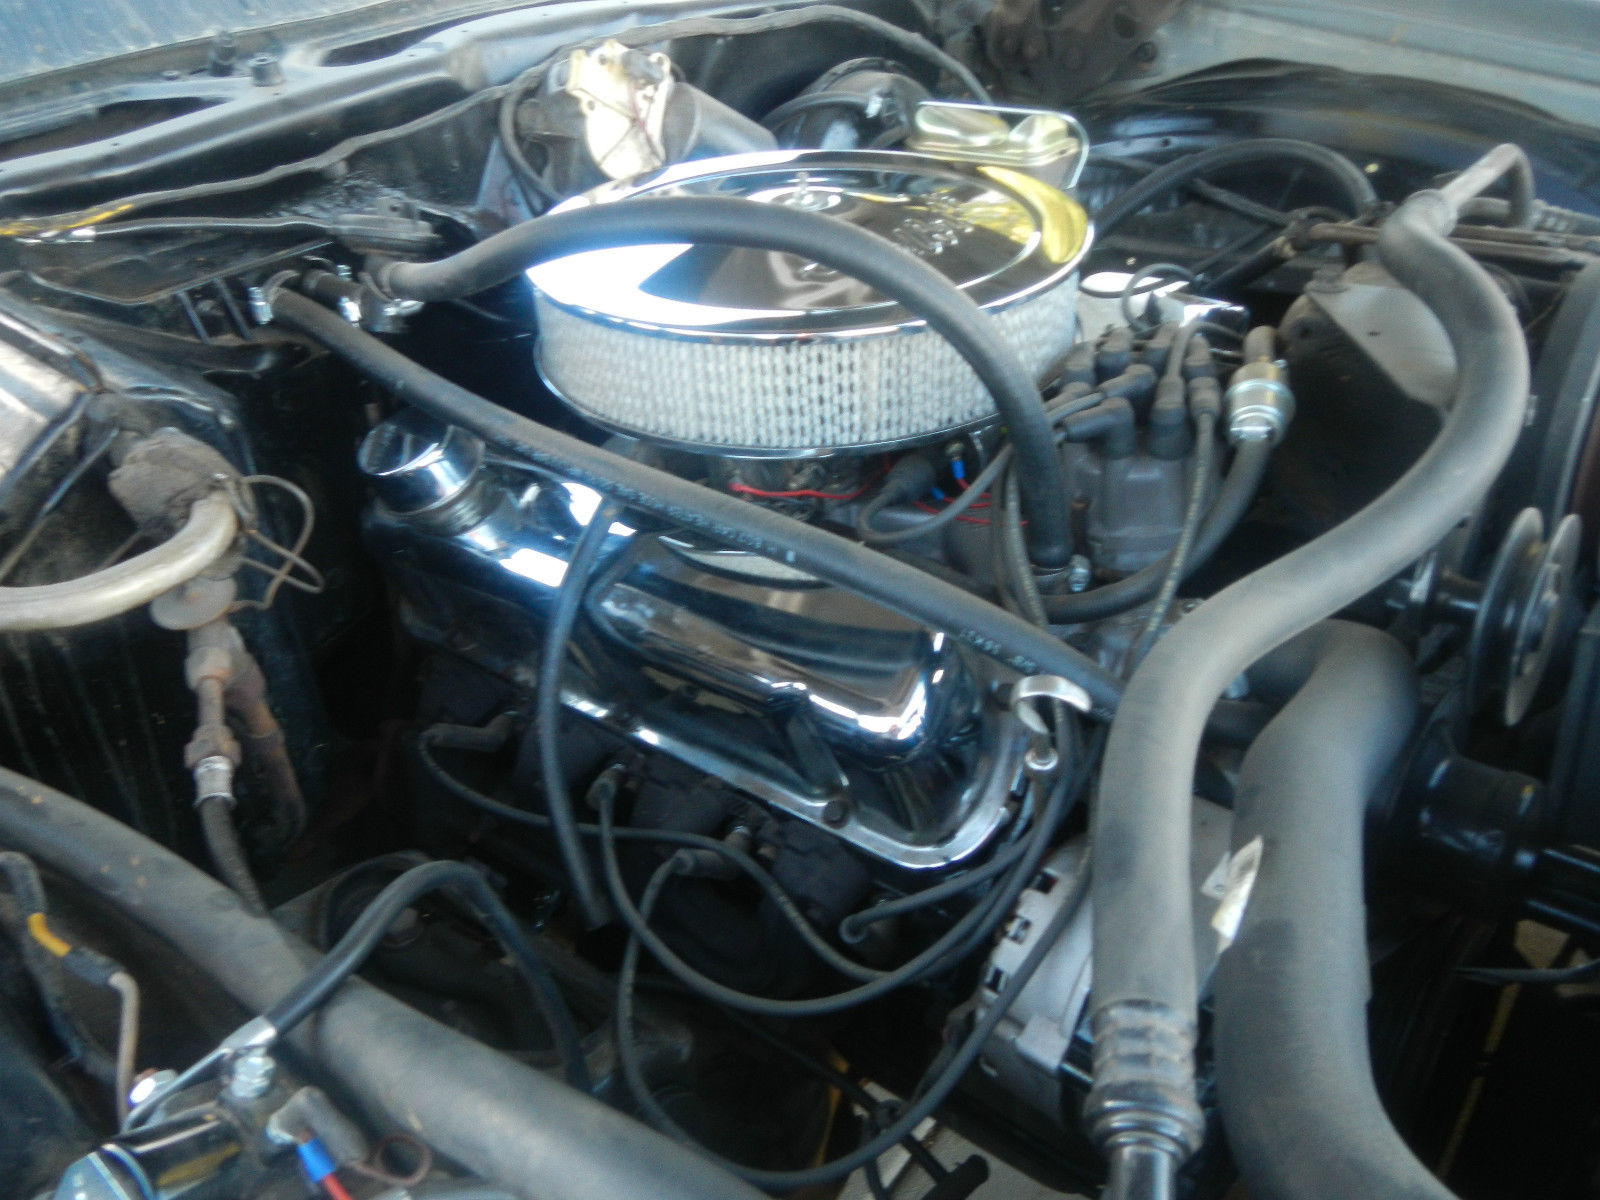 1972 Mercury Montego-2 Door Coupe,California Car,Fresh Rebuilt Engine